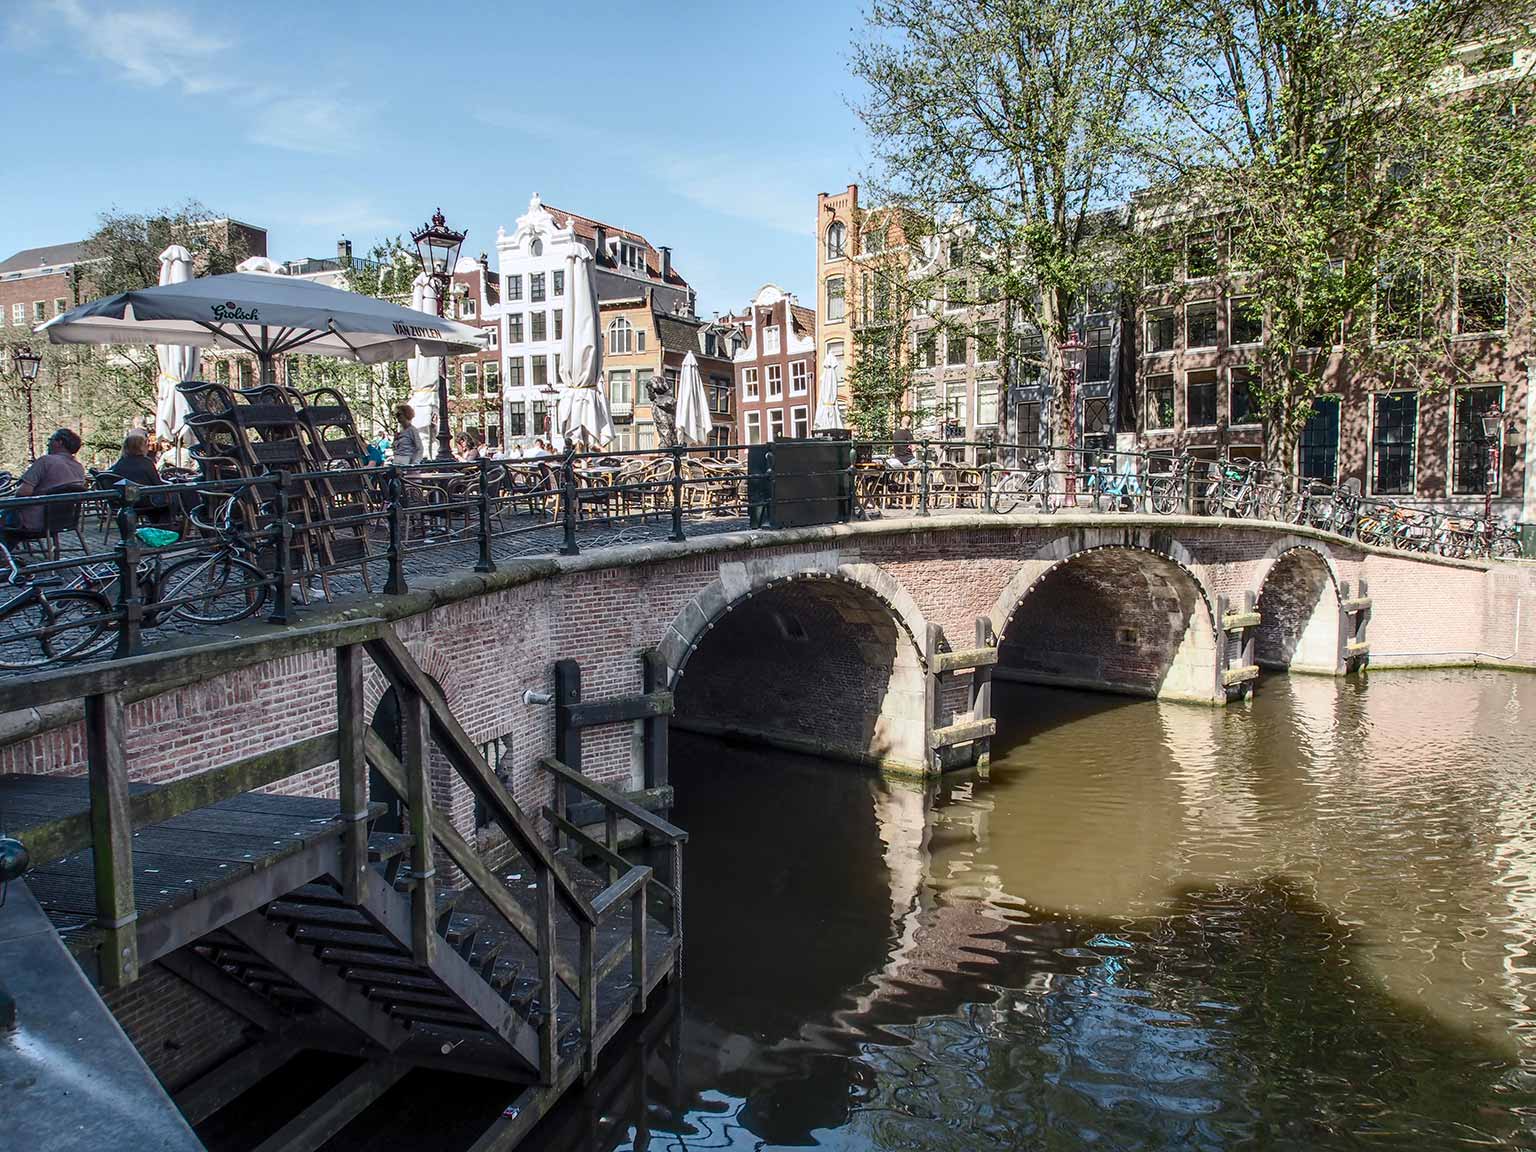 Torensluisbrug over het Singel, Amsterdam